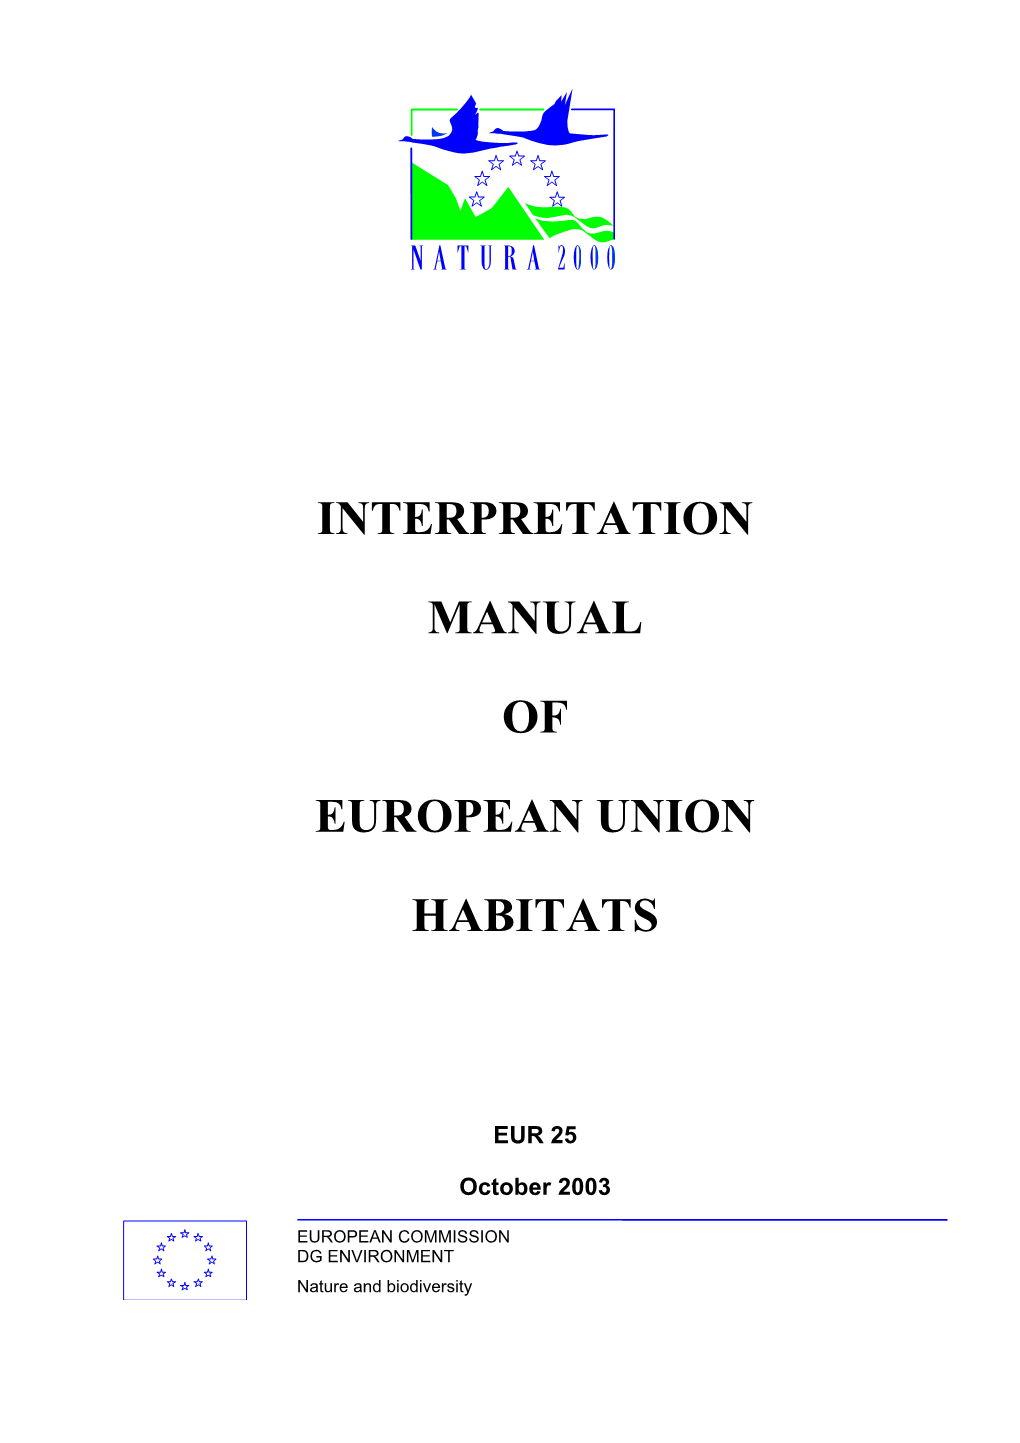 Interpretation Manual of European Union Habitats - EUR25 Is a Scientific Reference Document